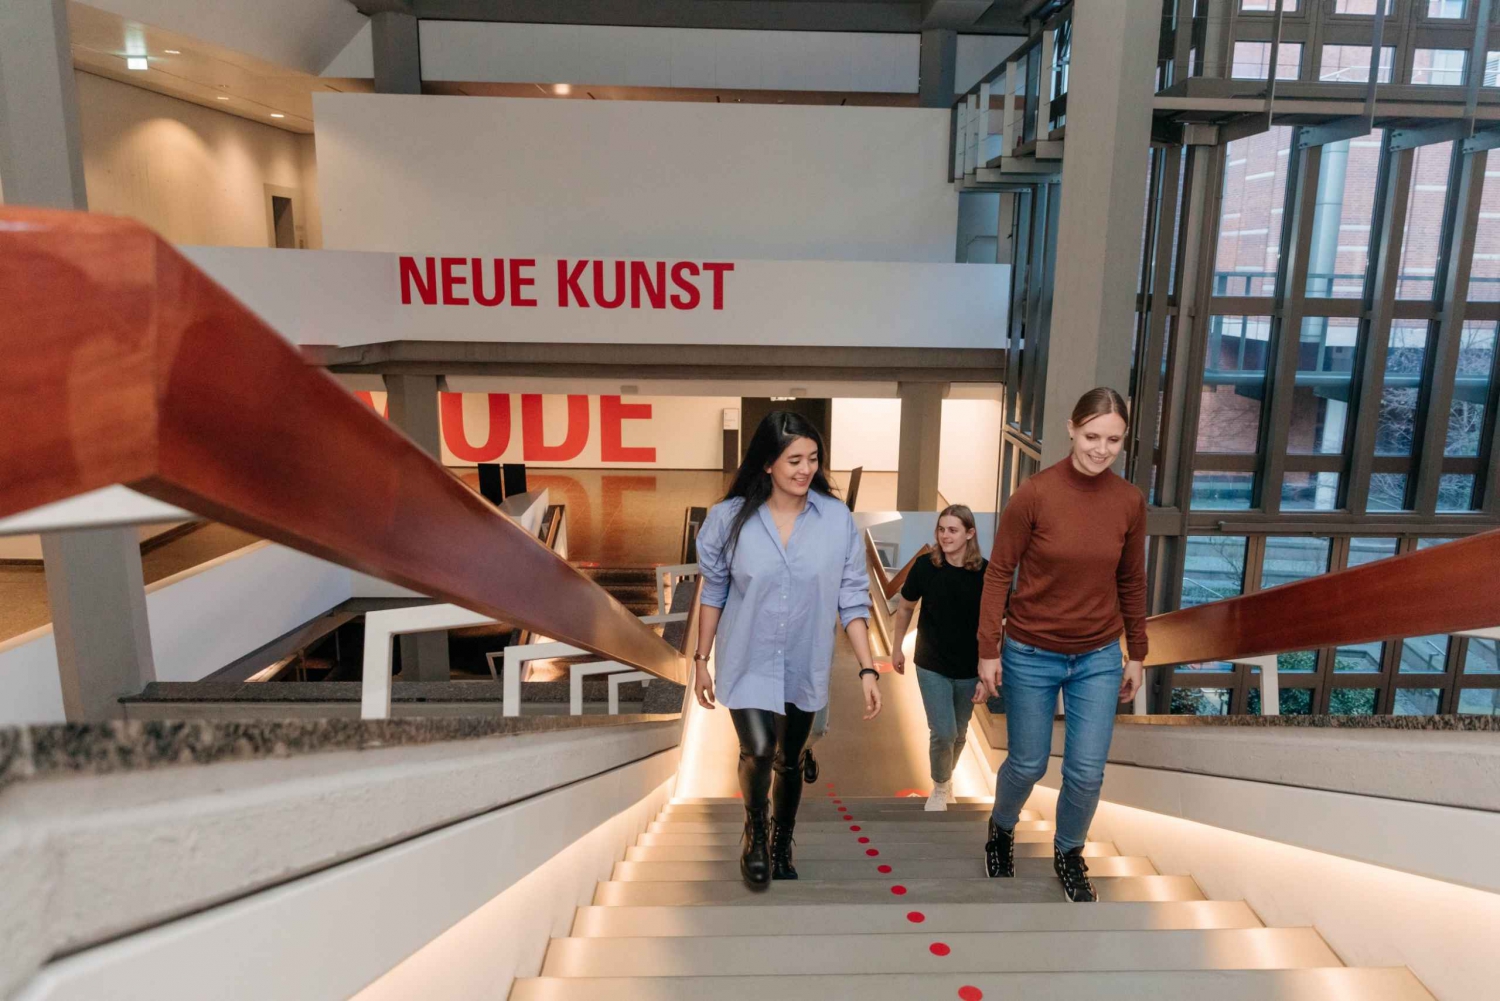 Berlin: Entry Ticket To The Kunstgewerbemuseum